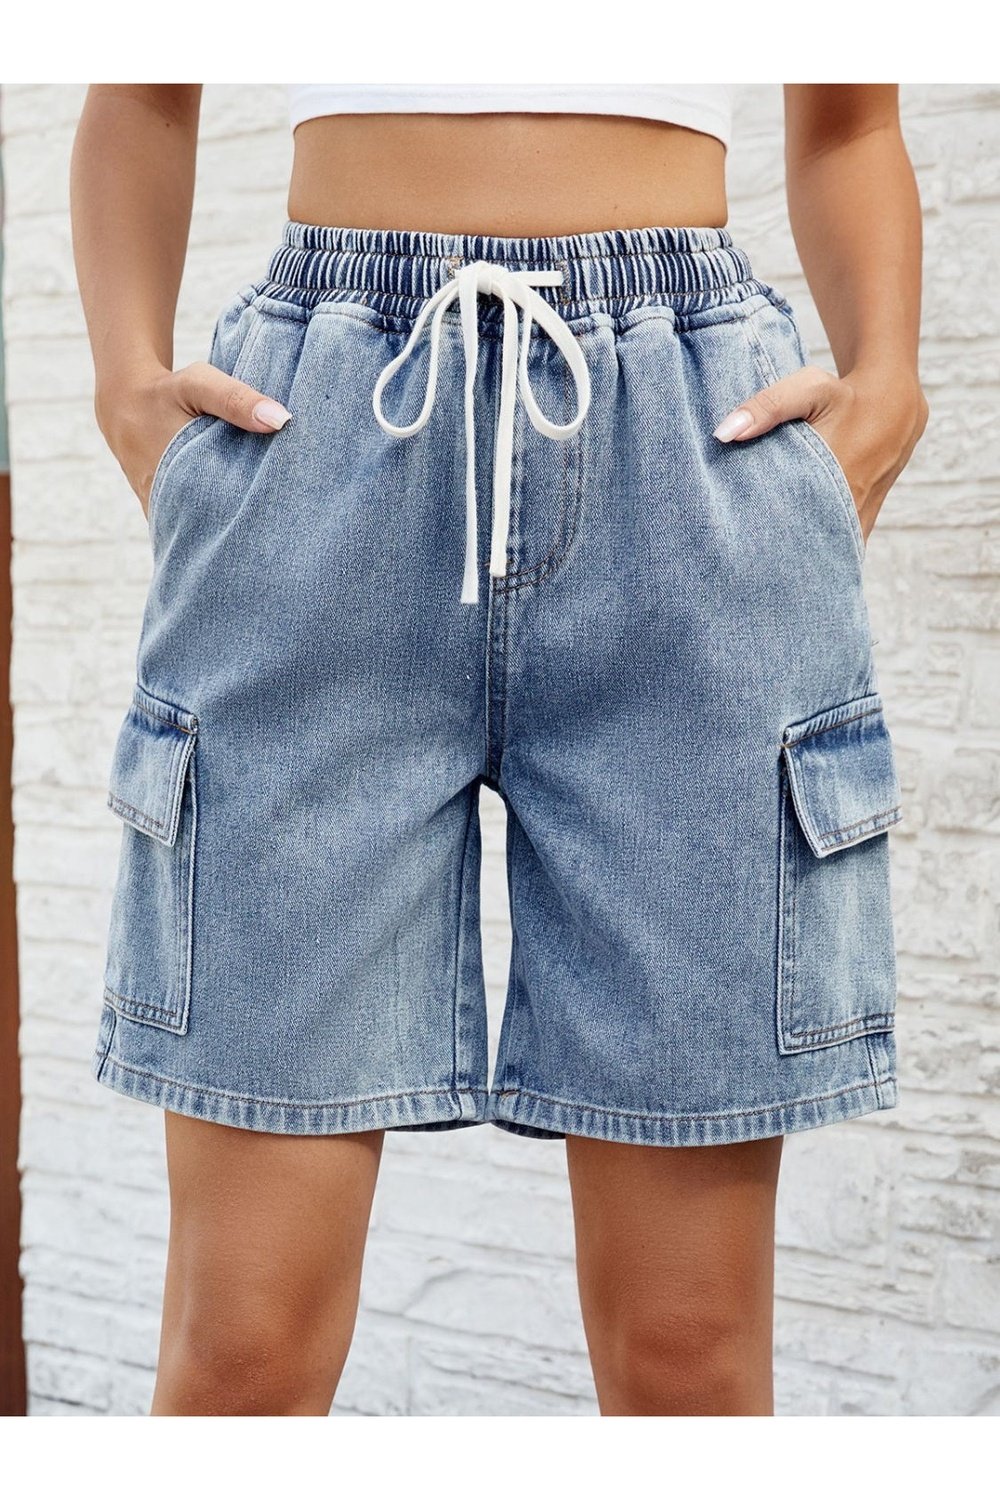 Drawstring Denim Shorts with Pockets - Denim Shorts - FITGGINS